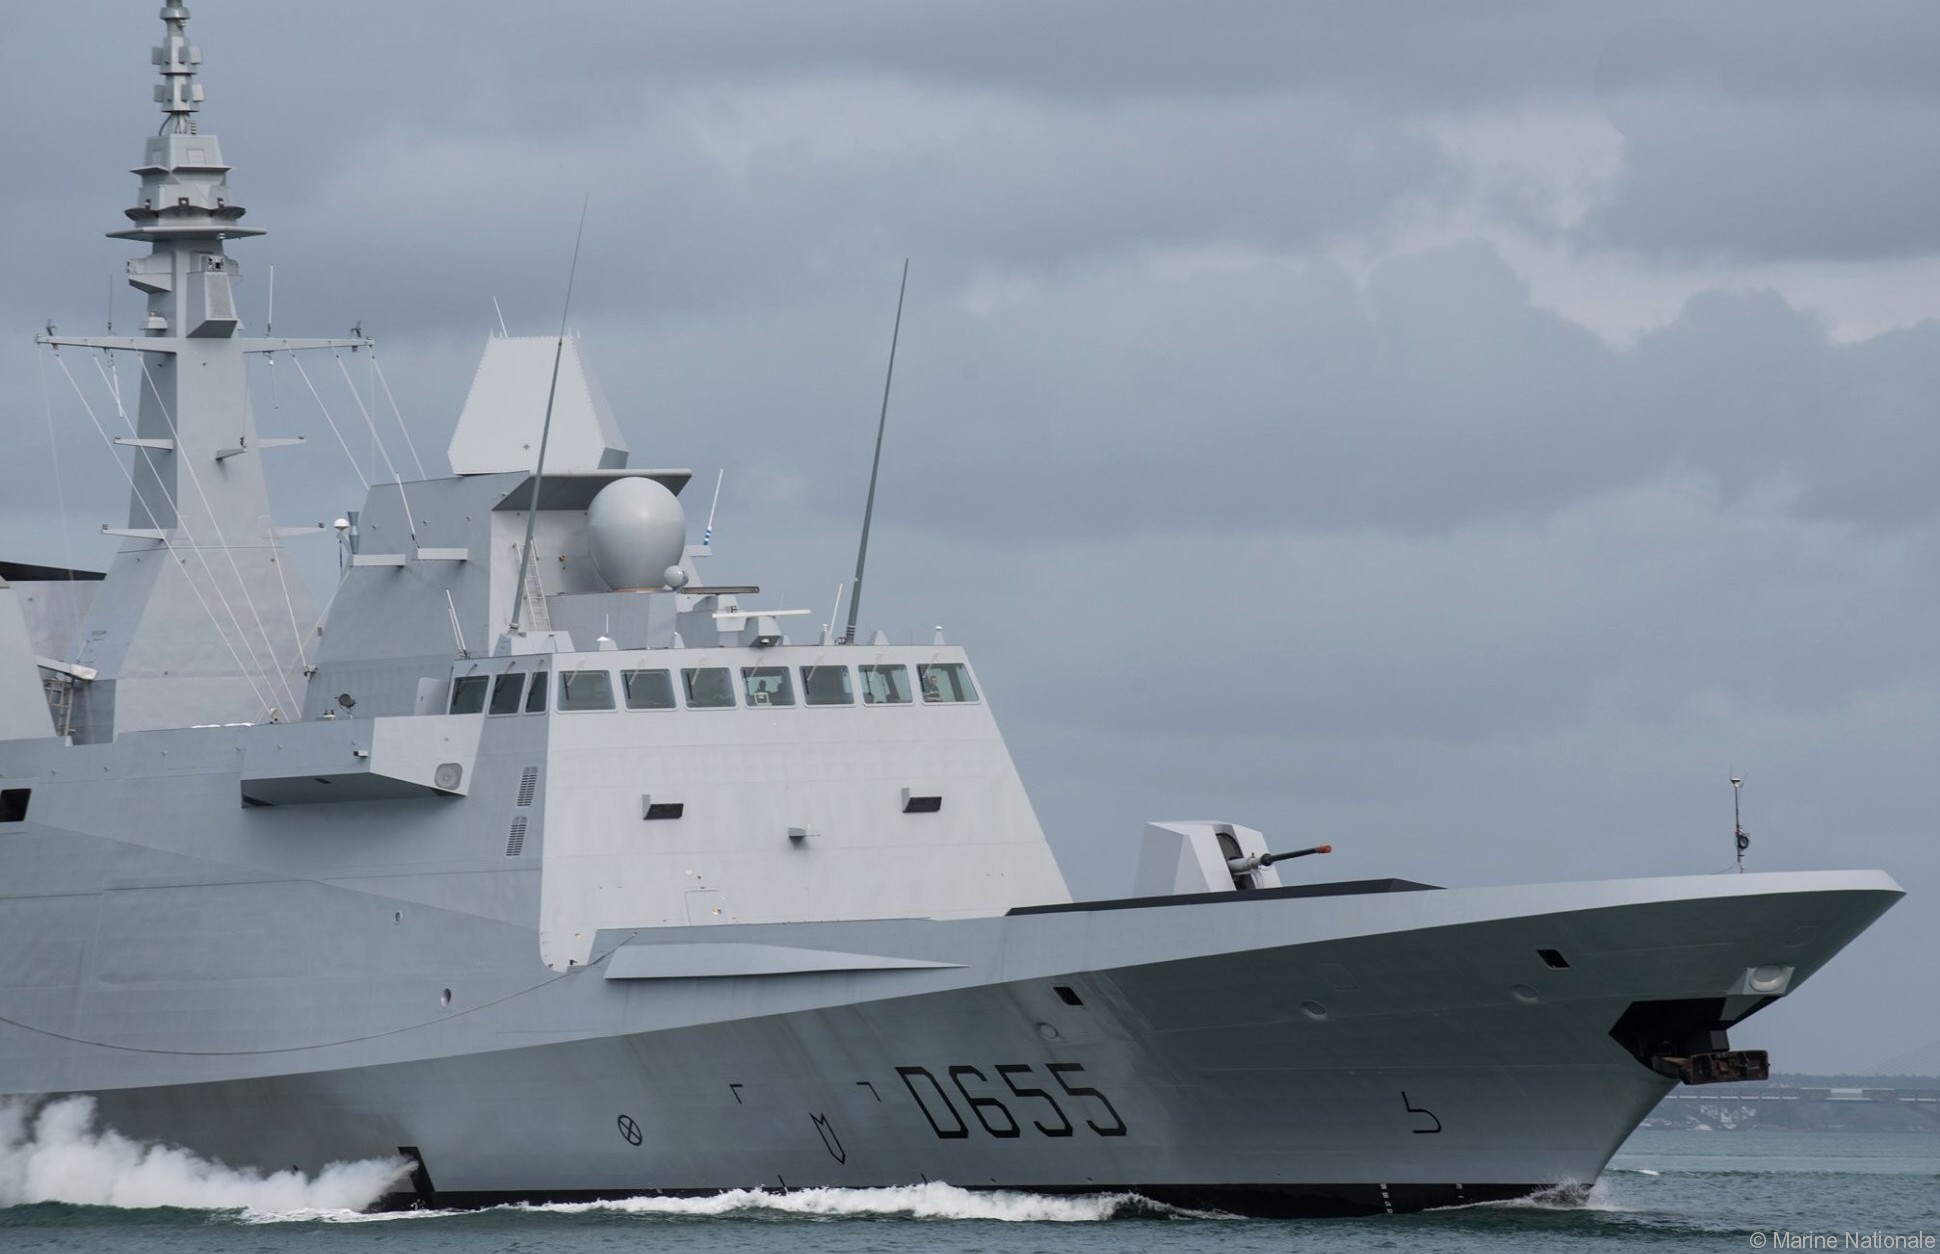 d-655 fs bretagne fremm aquitaine class frigate fregate multi purpose french navy marine nationale 16 aster sam missile mdcn scalp ssm